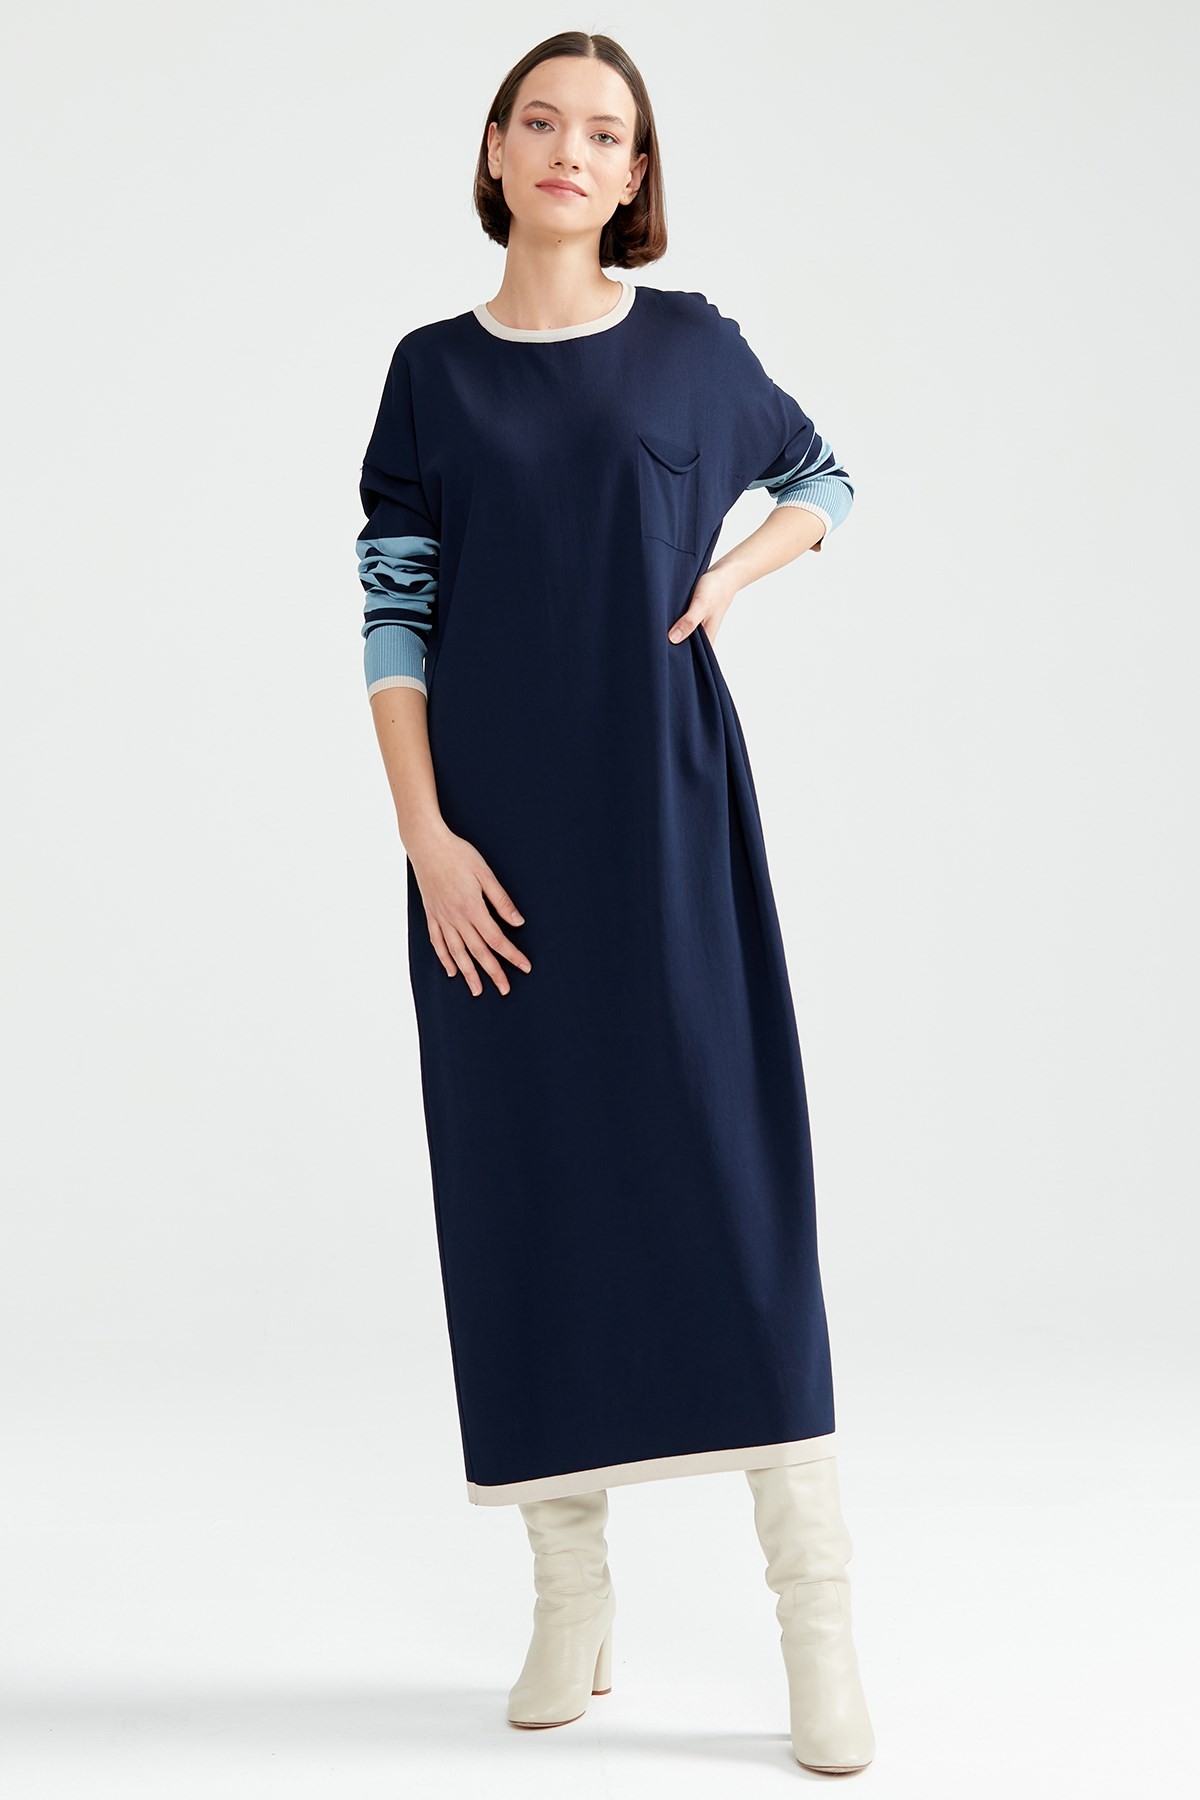 Tığ Triko Elbise 21021 - Lacivert